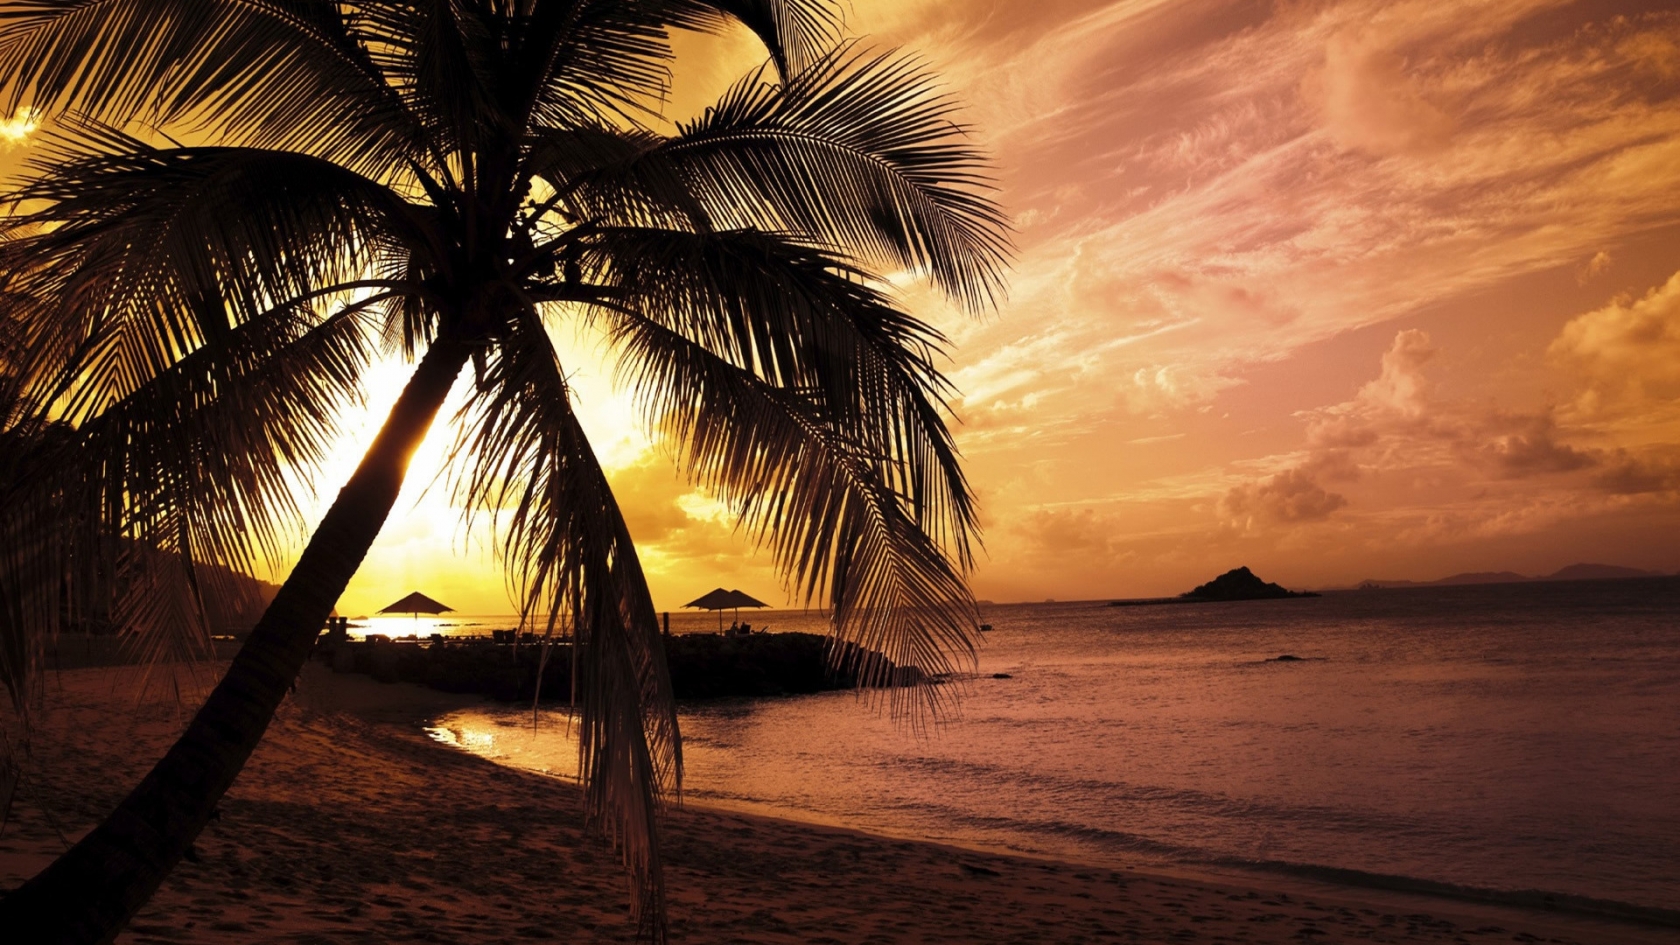 Beach Sunset for 1680 x 945 HDTV resolution